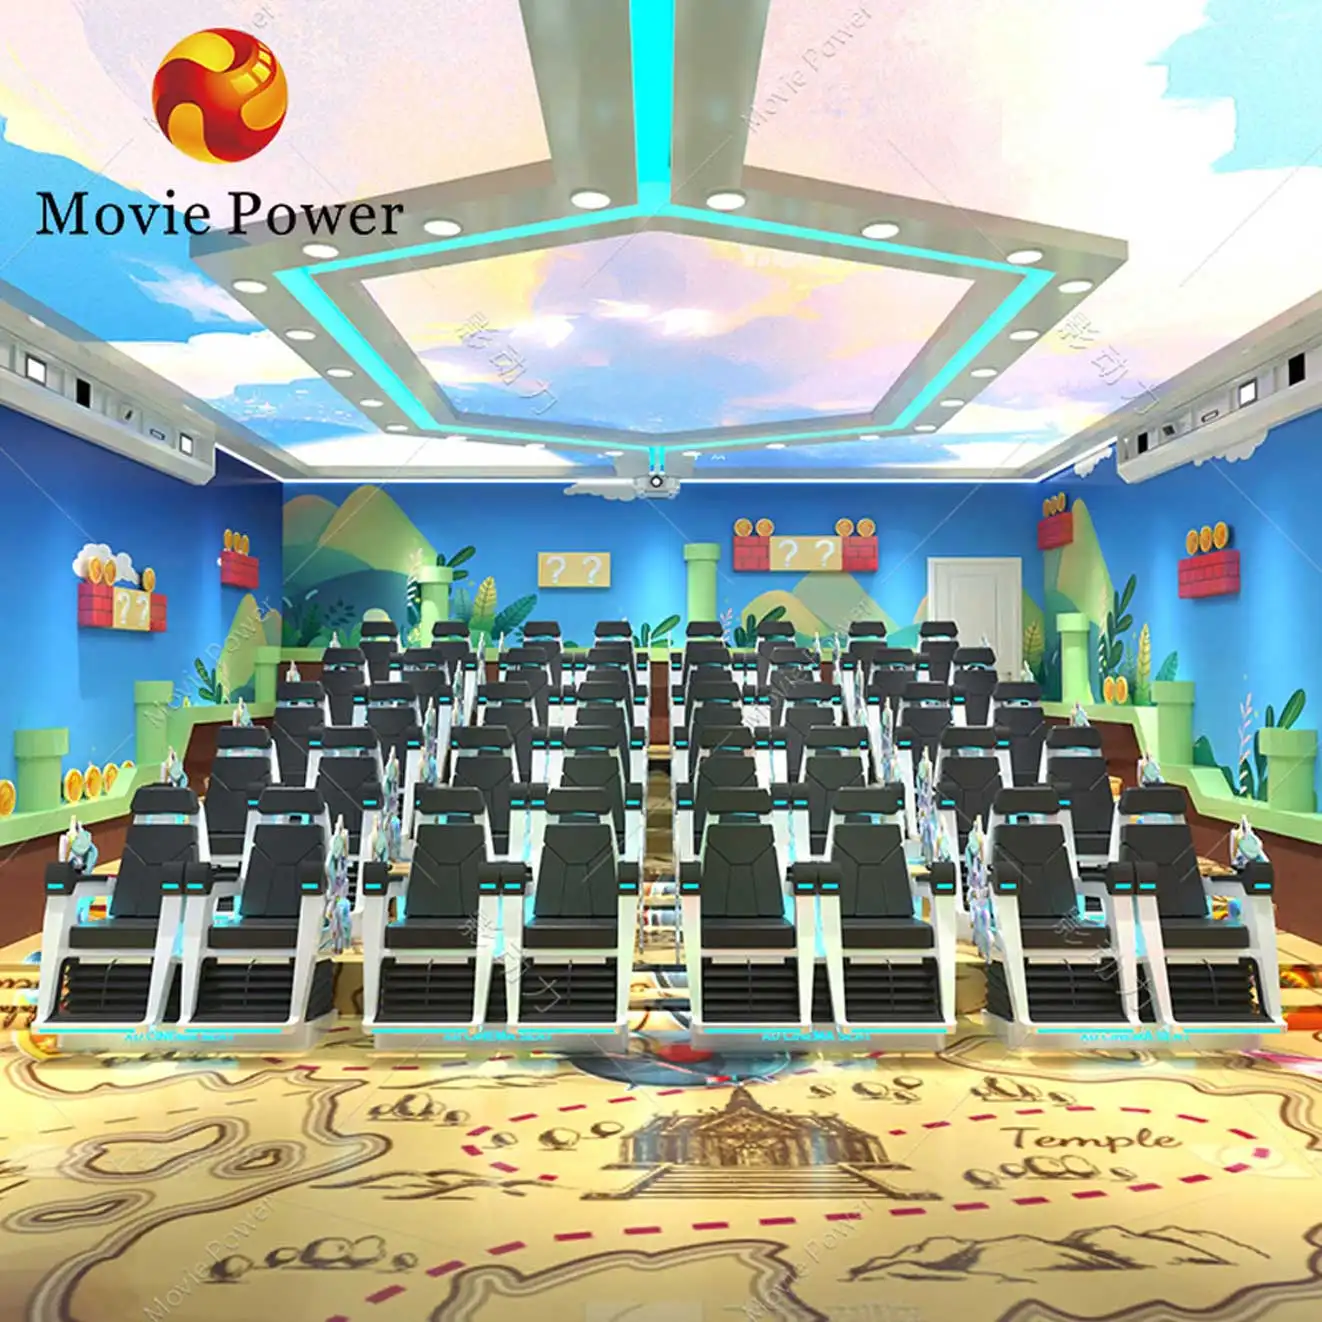 Sistema de filmes fornecedores vr equipamento de cinema cinema 4d 5d 7d 9d 6d cinema teatro com multi seat